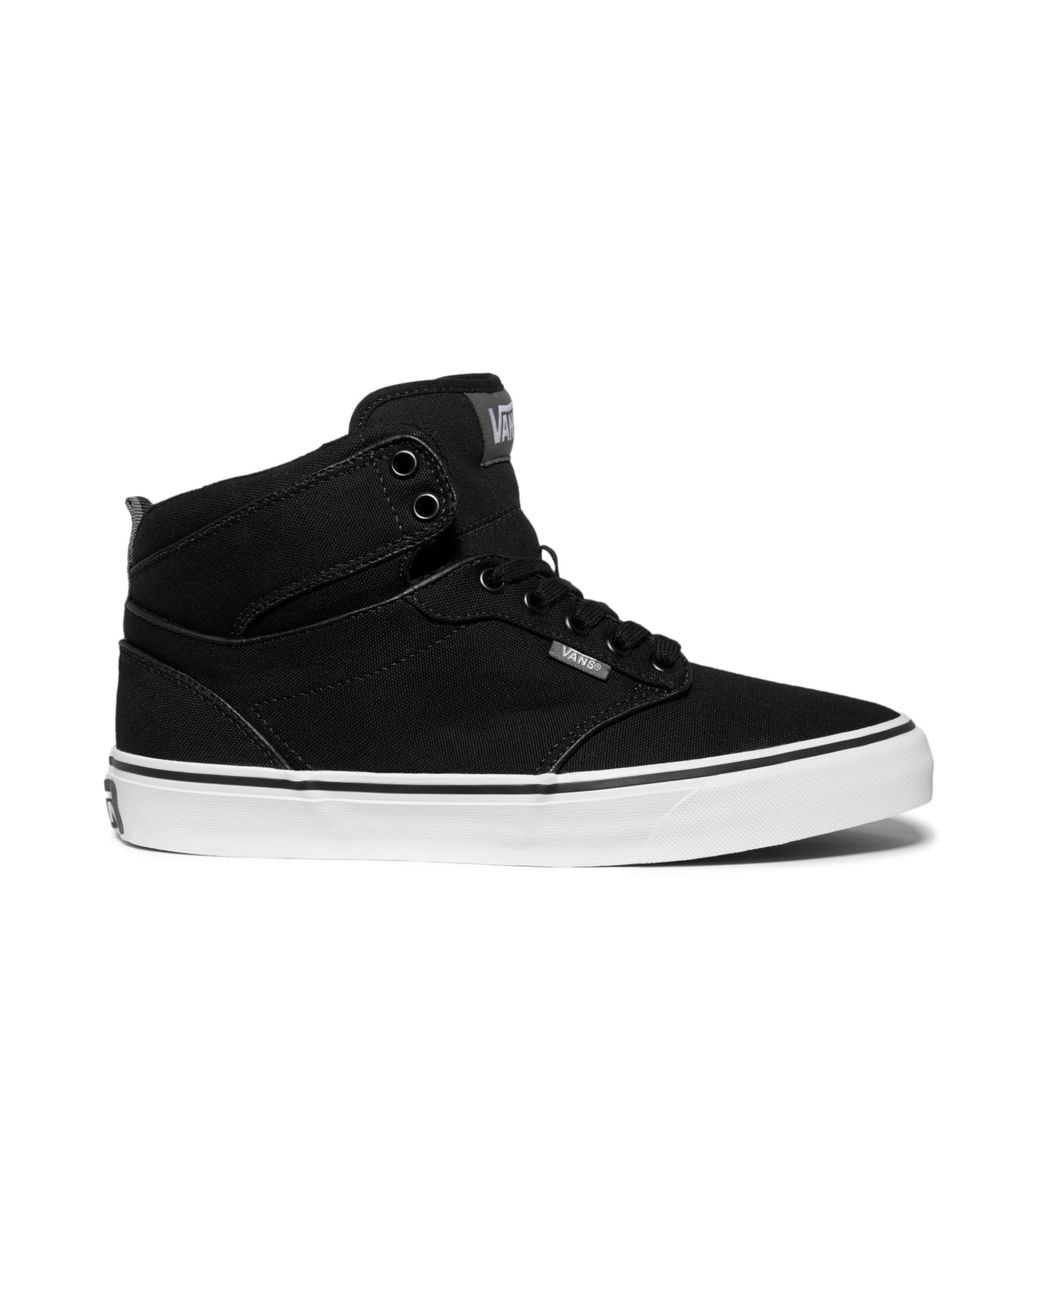 Vans Atwood Hi Sneakers in Black/White (Black) for Men | Lyst